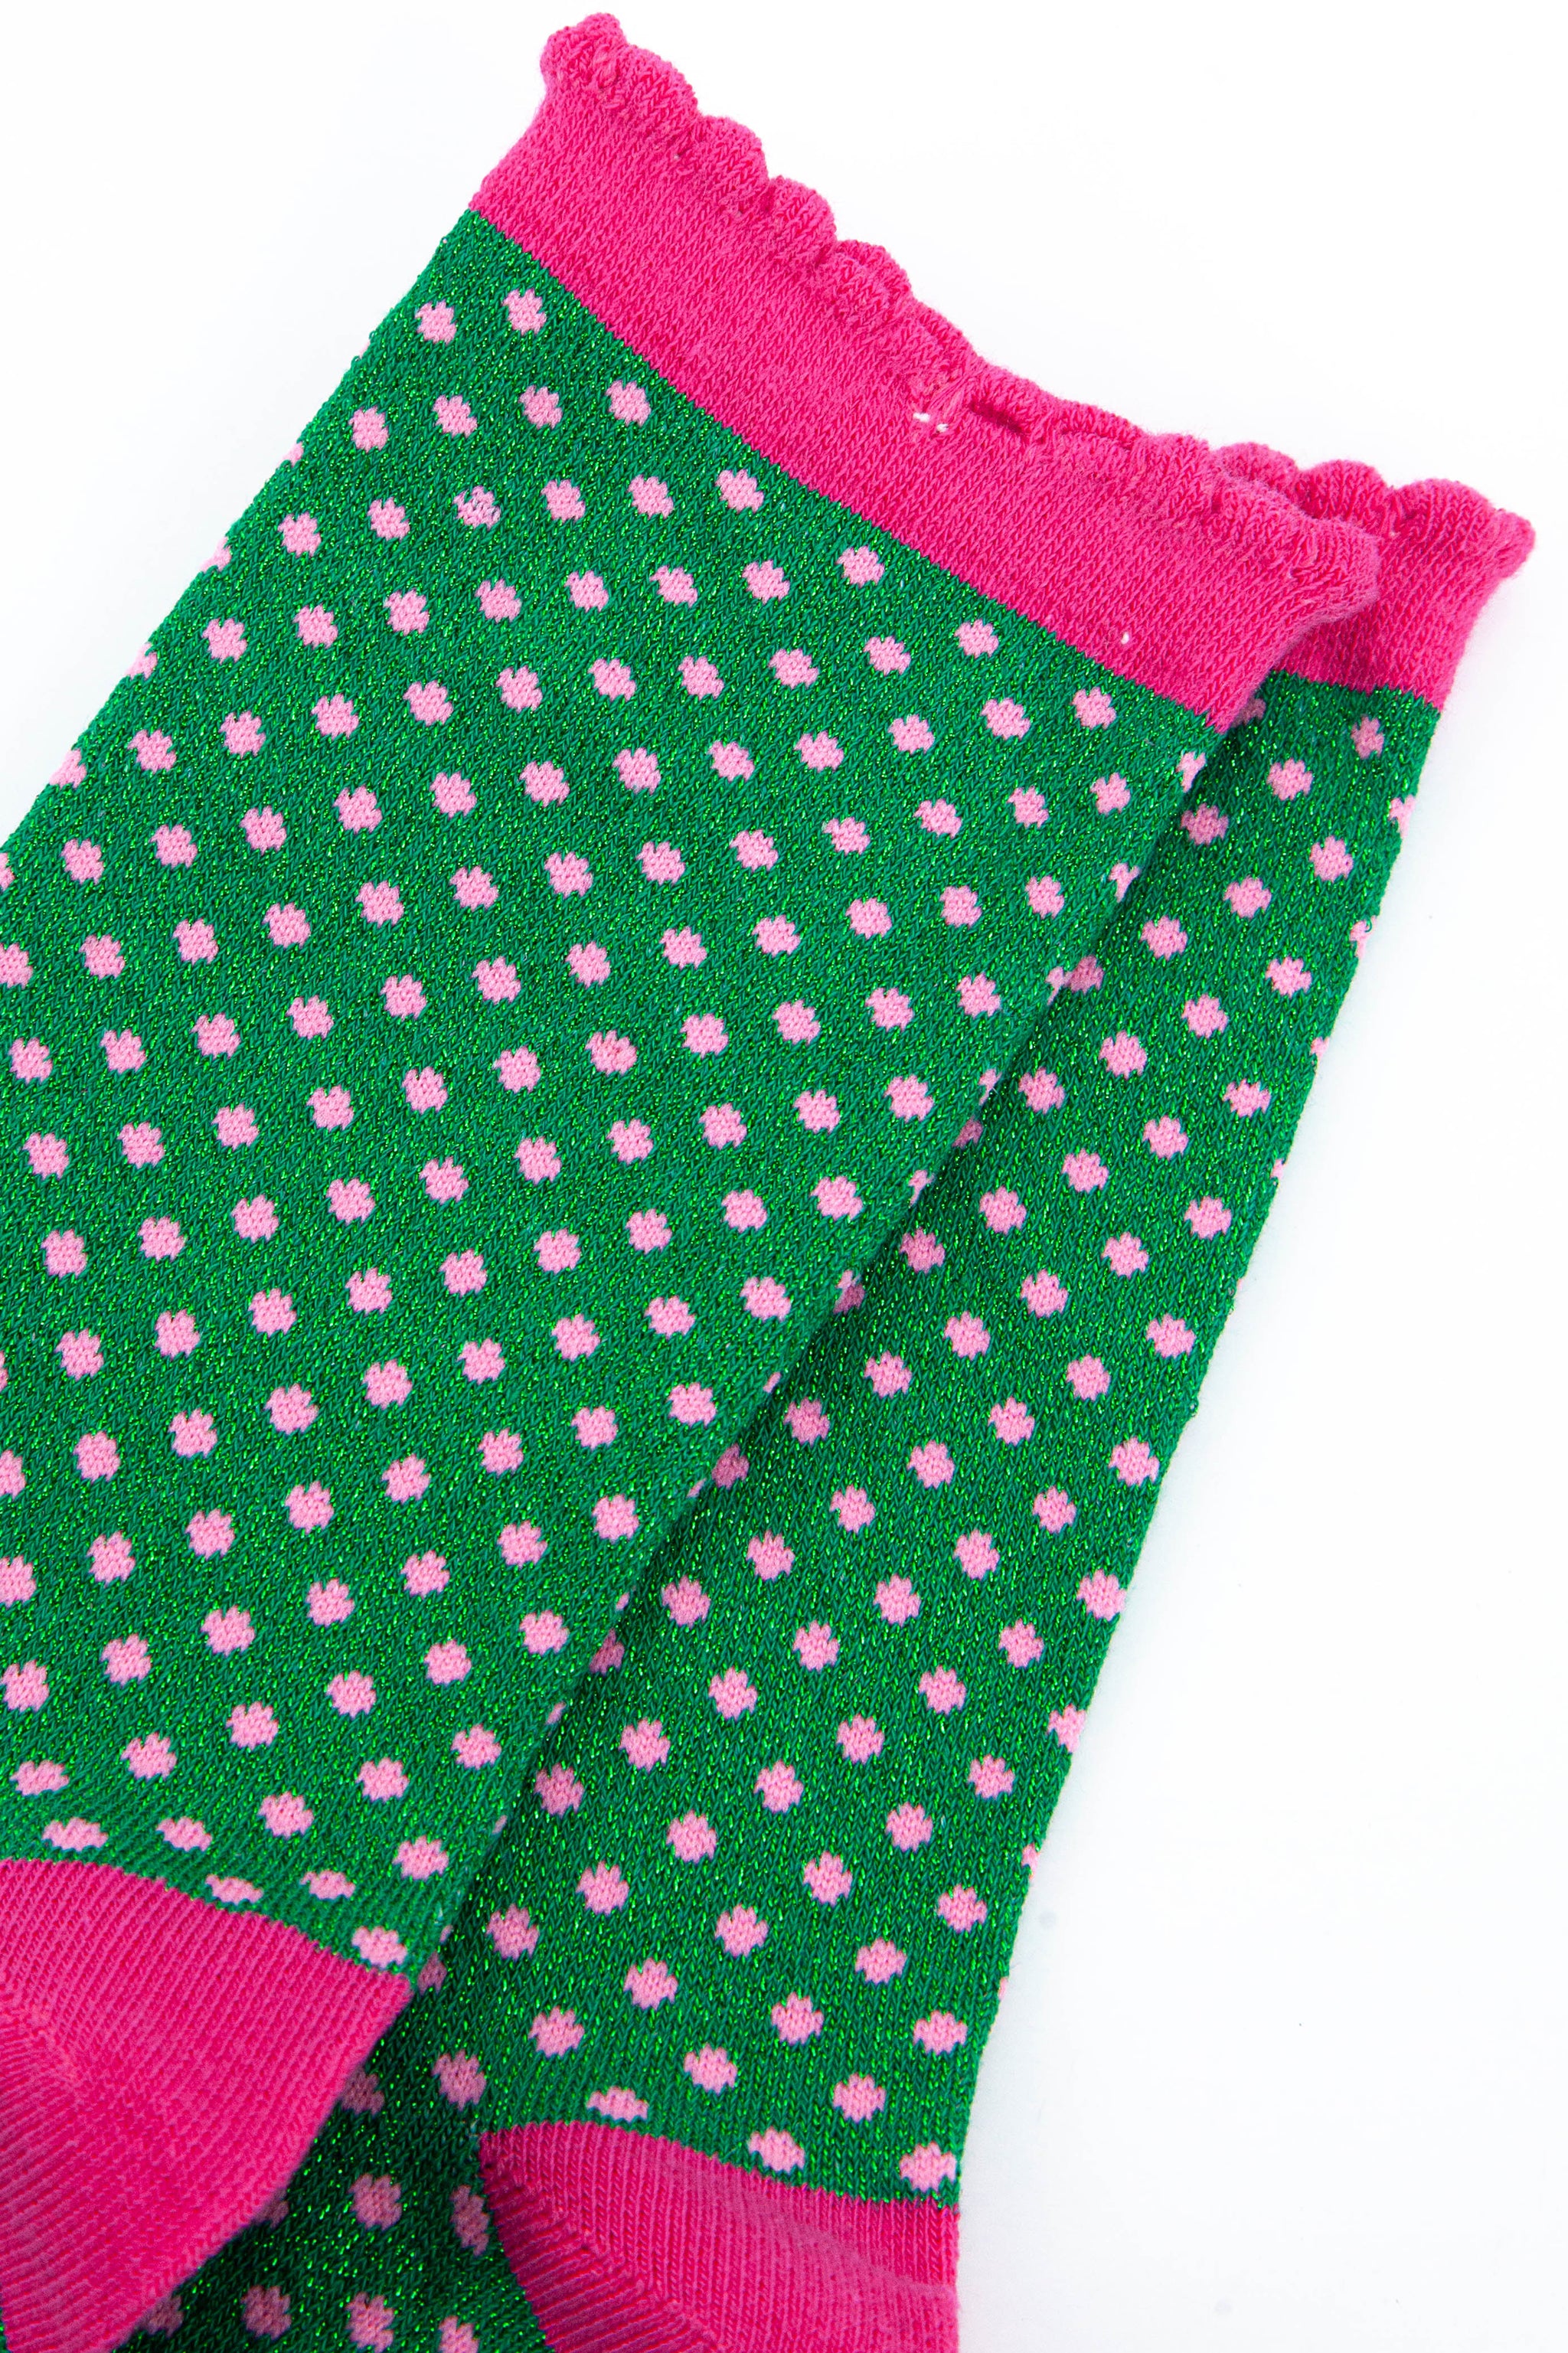 Glitter Cotton Socks in Polkadot Pink & Green